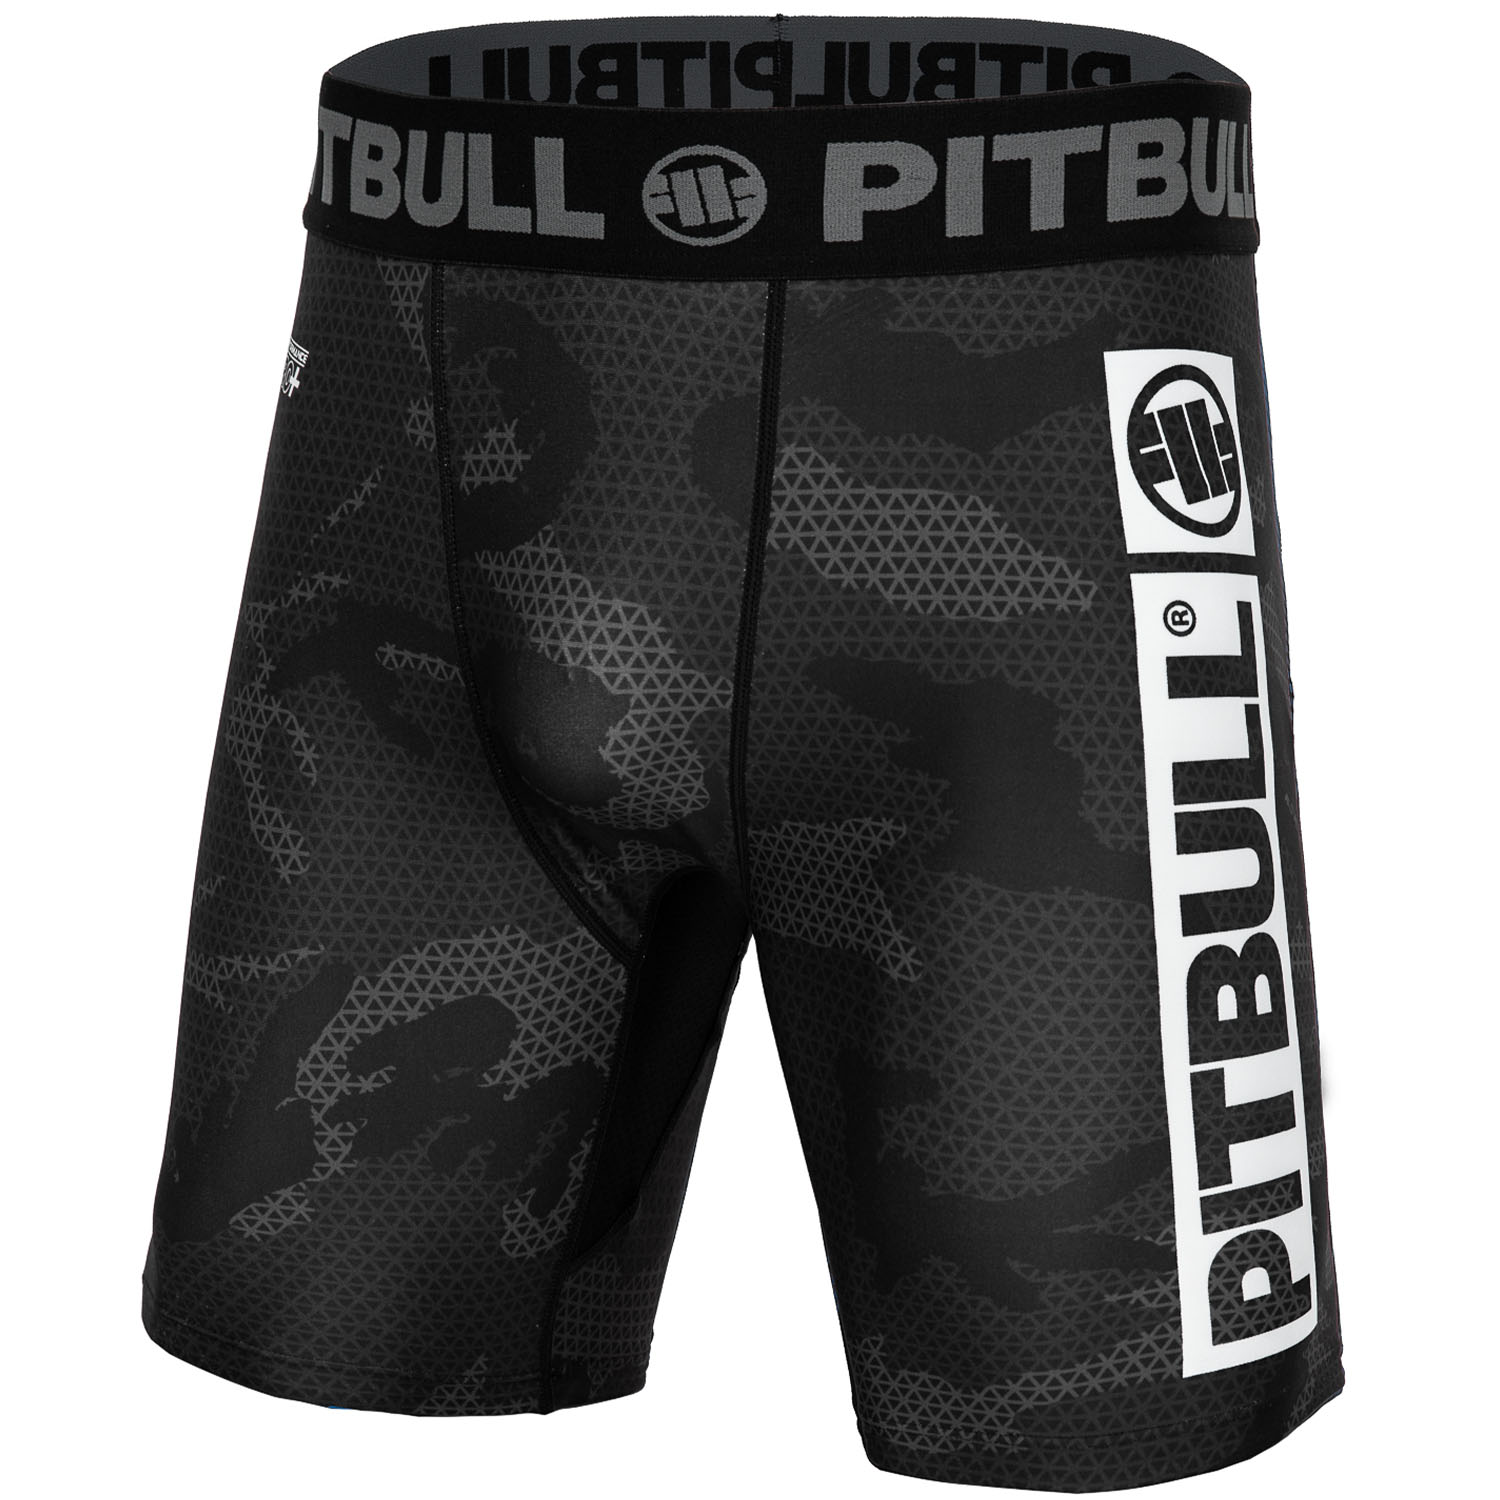 Pit Bull West Coast Compression Shorts, Net-camo Hilltop 2, schwarz-camo